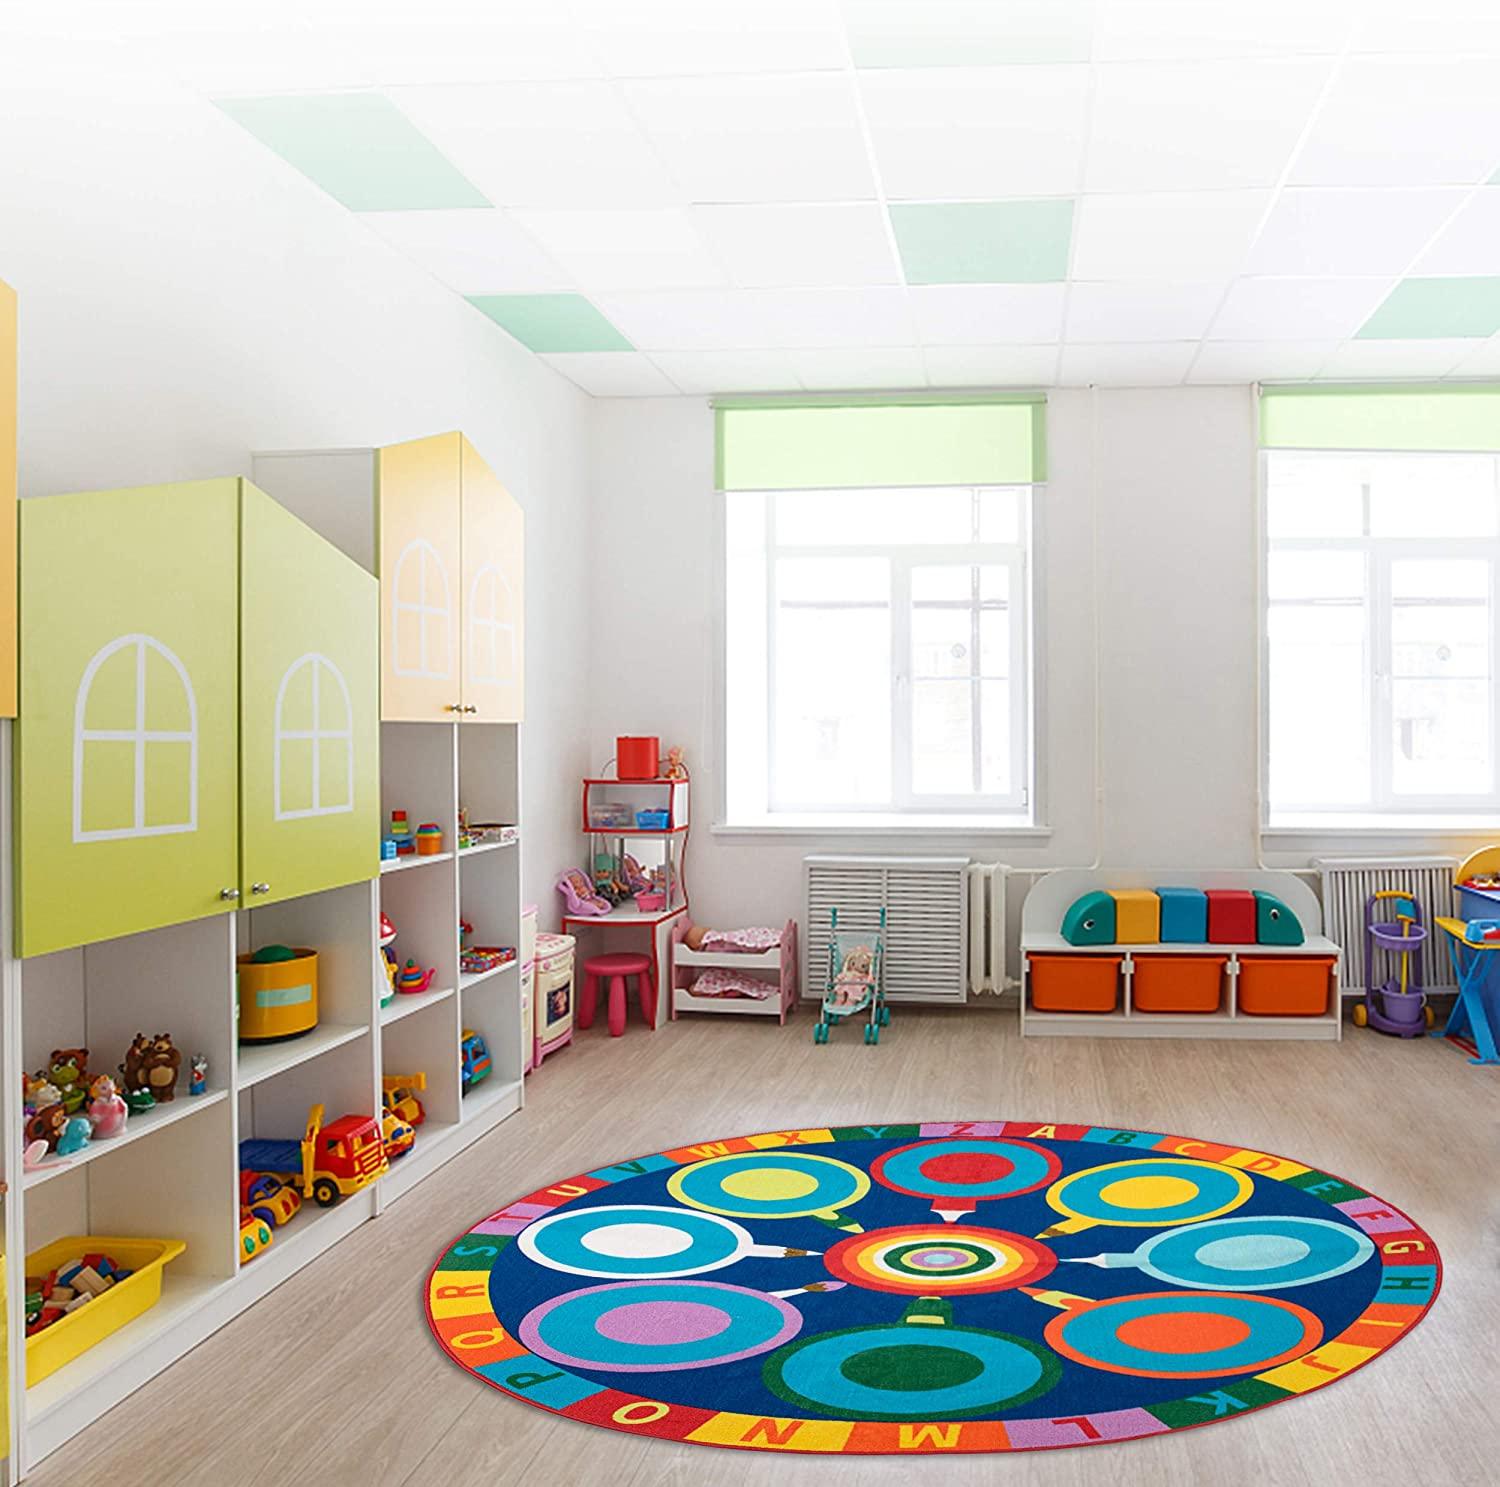 6'5 x6'5 Round Kids Classroom Seating Rug - BooooomJackson-Kids Rugs Carpet